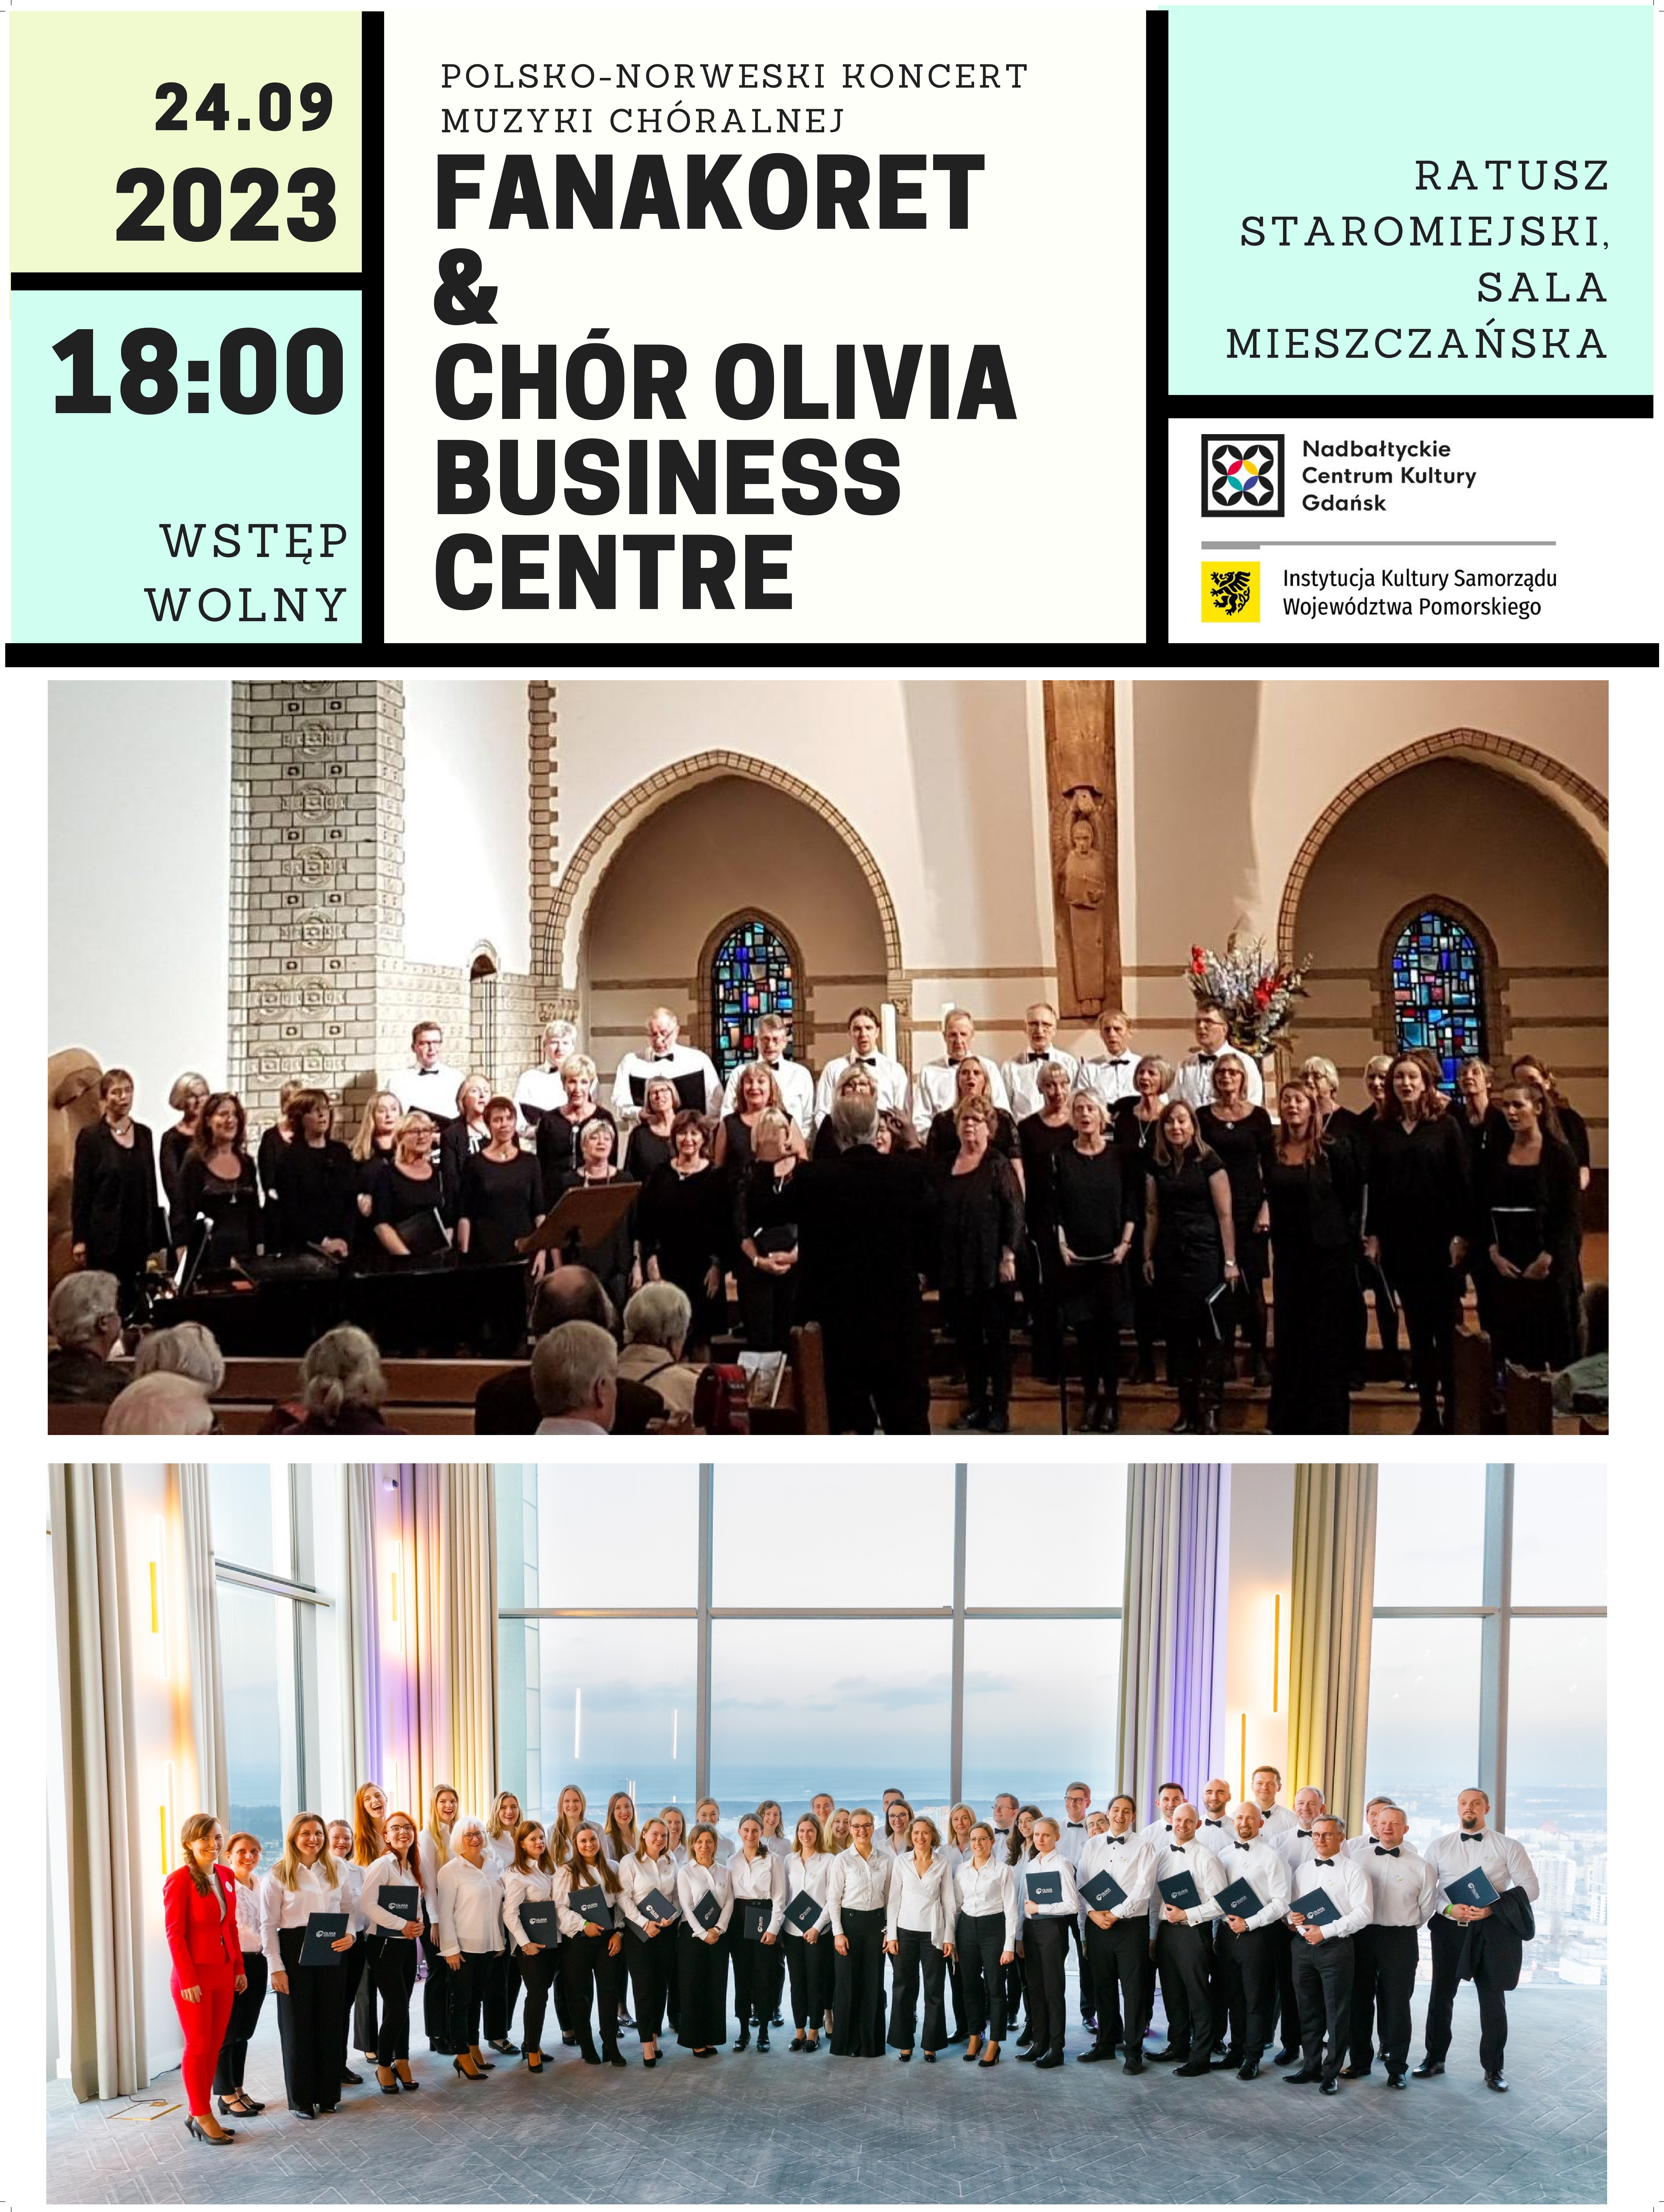 Polsko-norweski koncert muzyki chóralnej